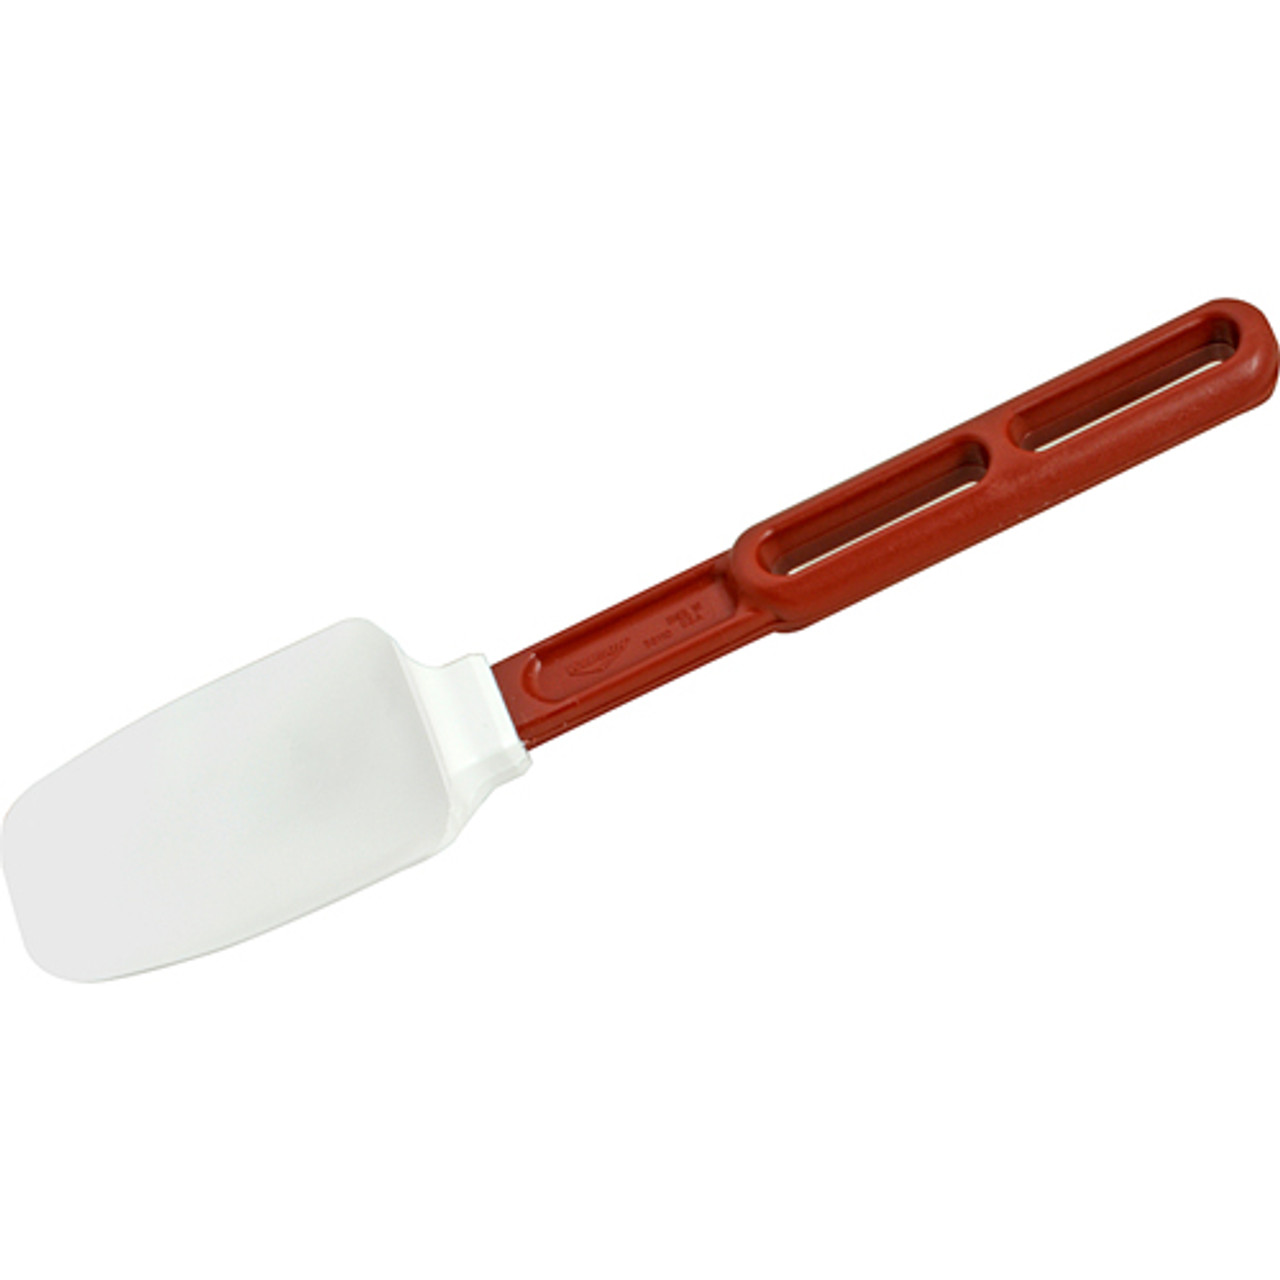 Traex 58110 - Scraper Spoon Heat 9 1/2